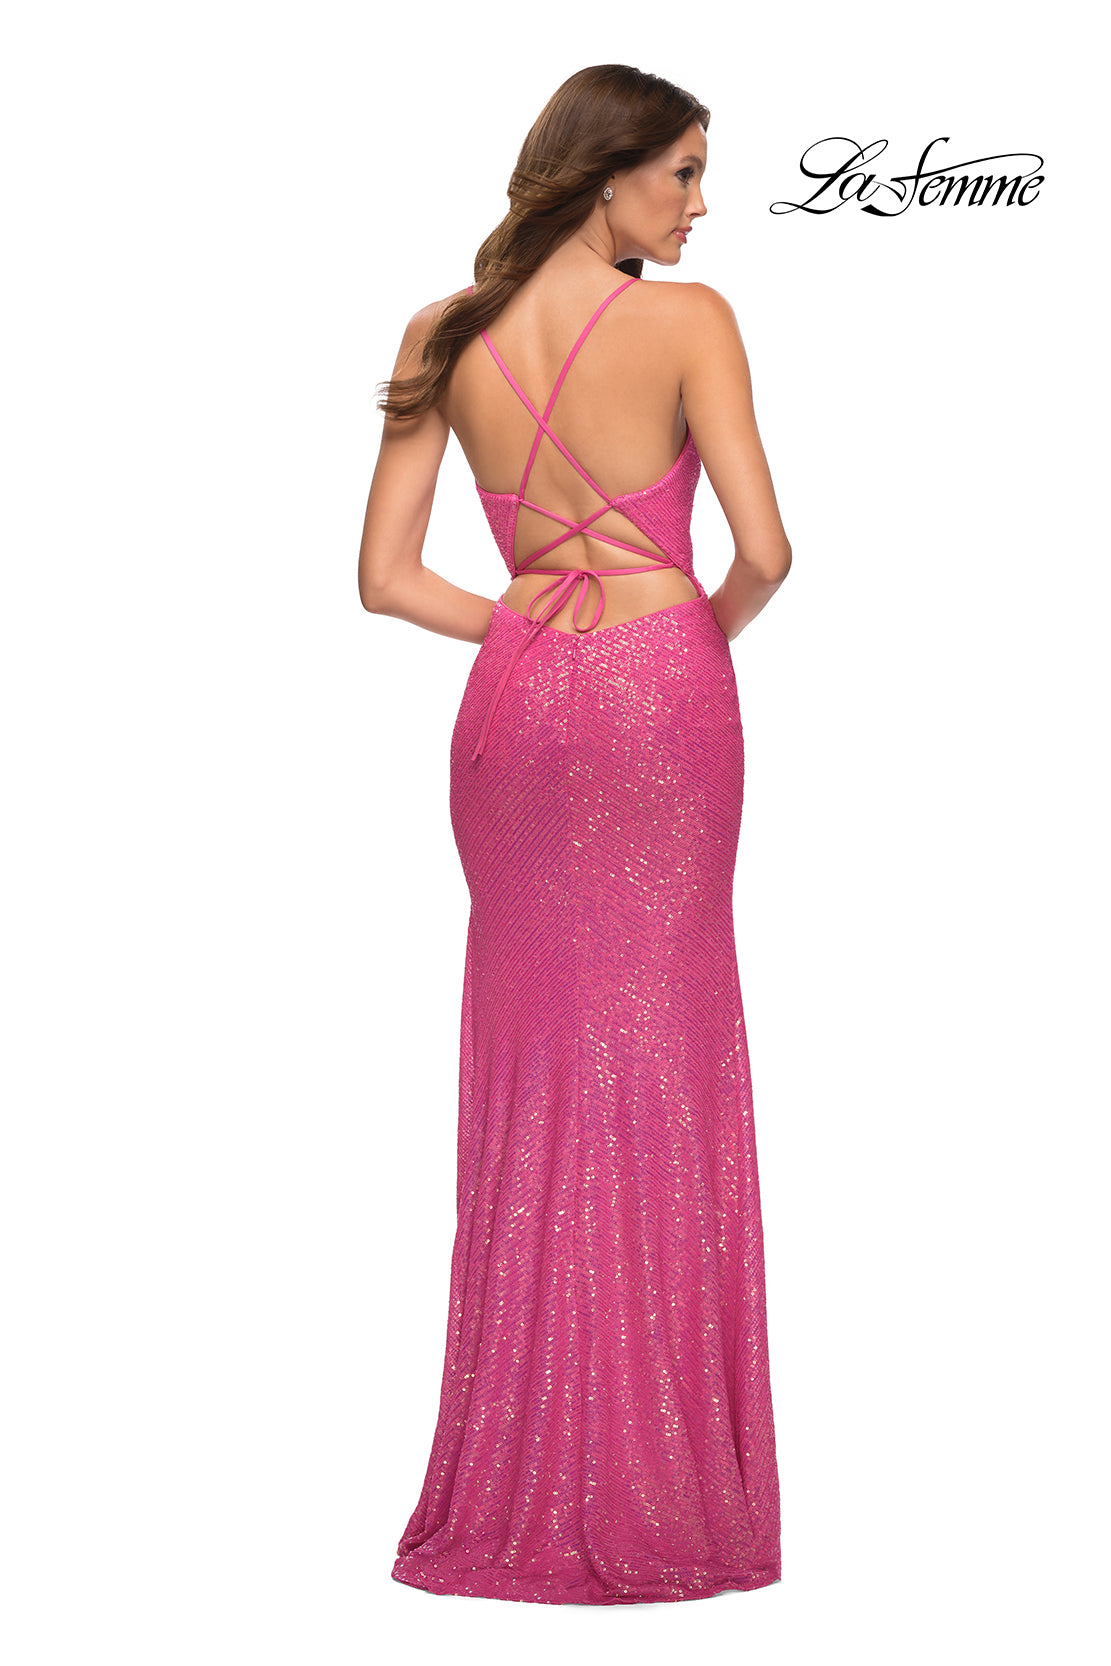 La Femme Sequin Hot Pink Long Prom Dress